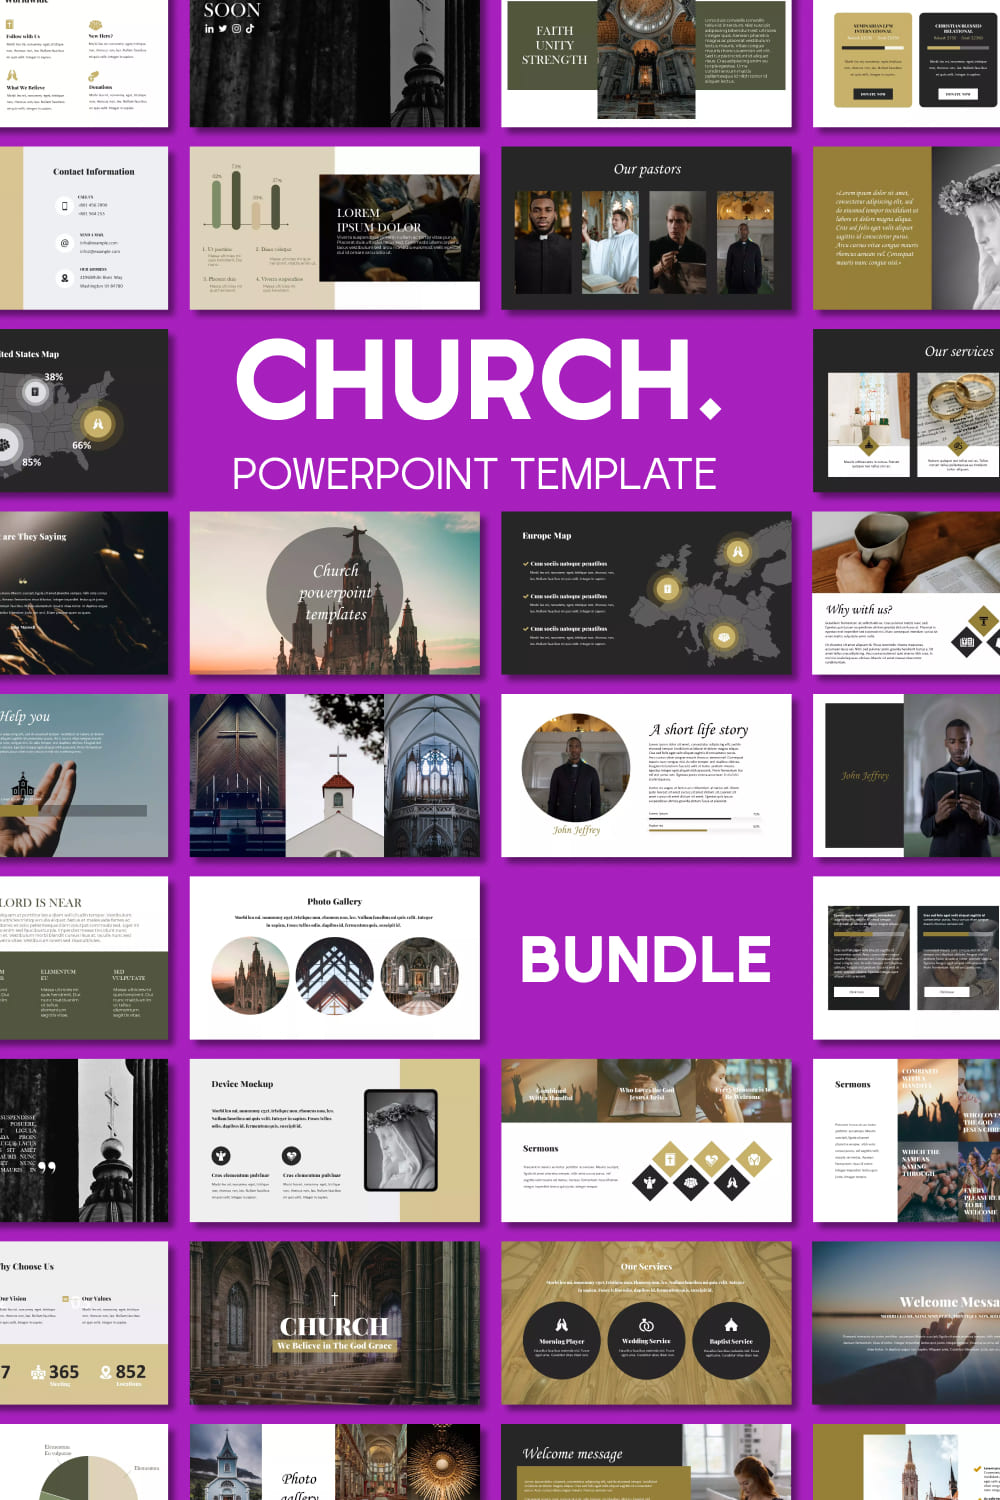 Church PowerPoint Templates Bundle - Pinterest.